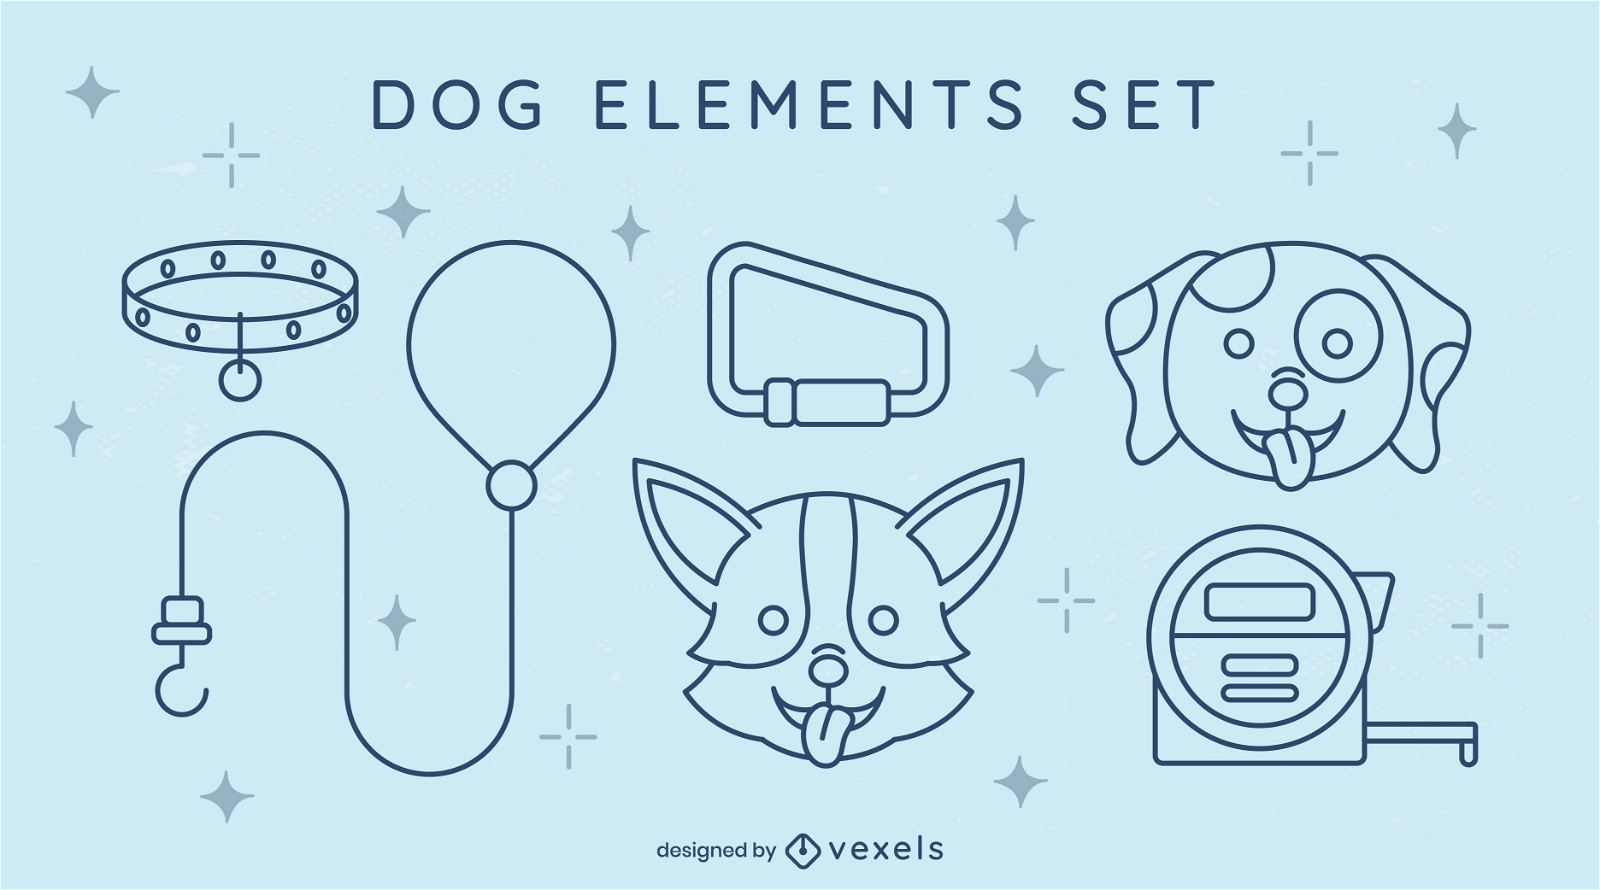 Dog elements stroke set